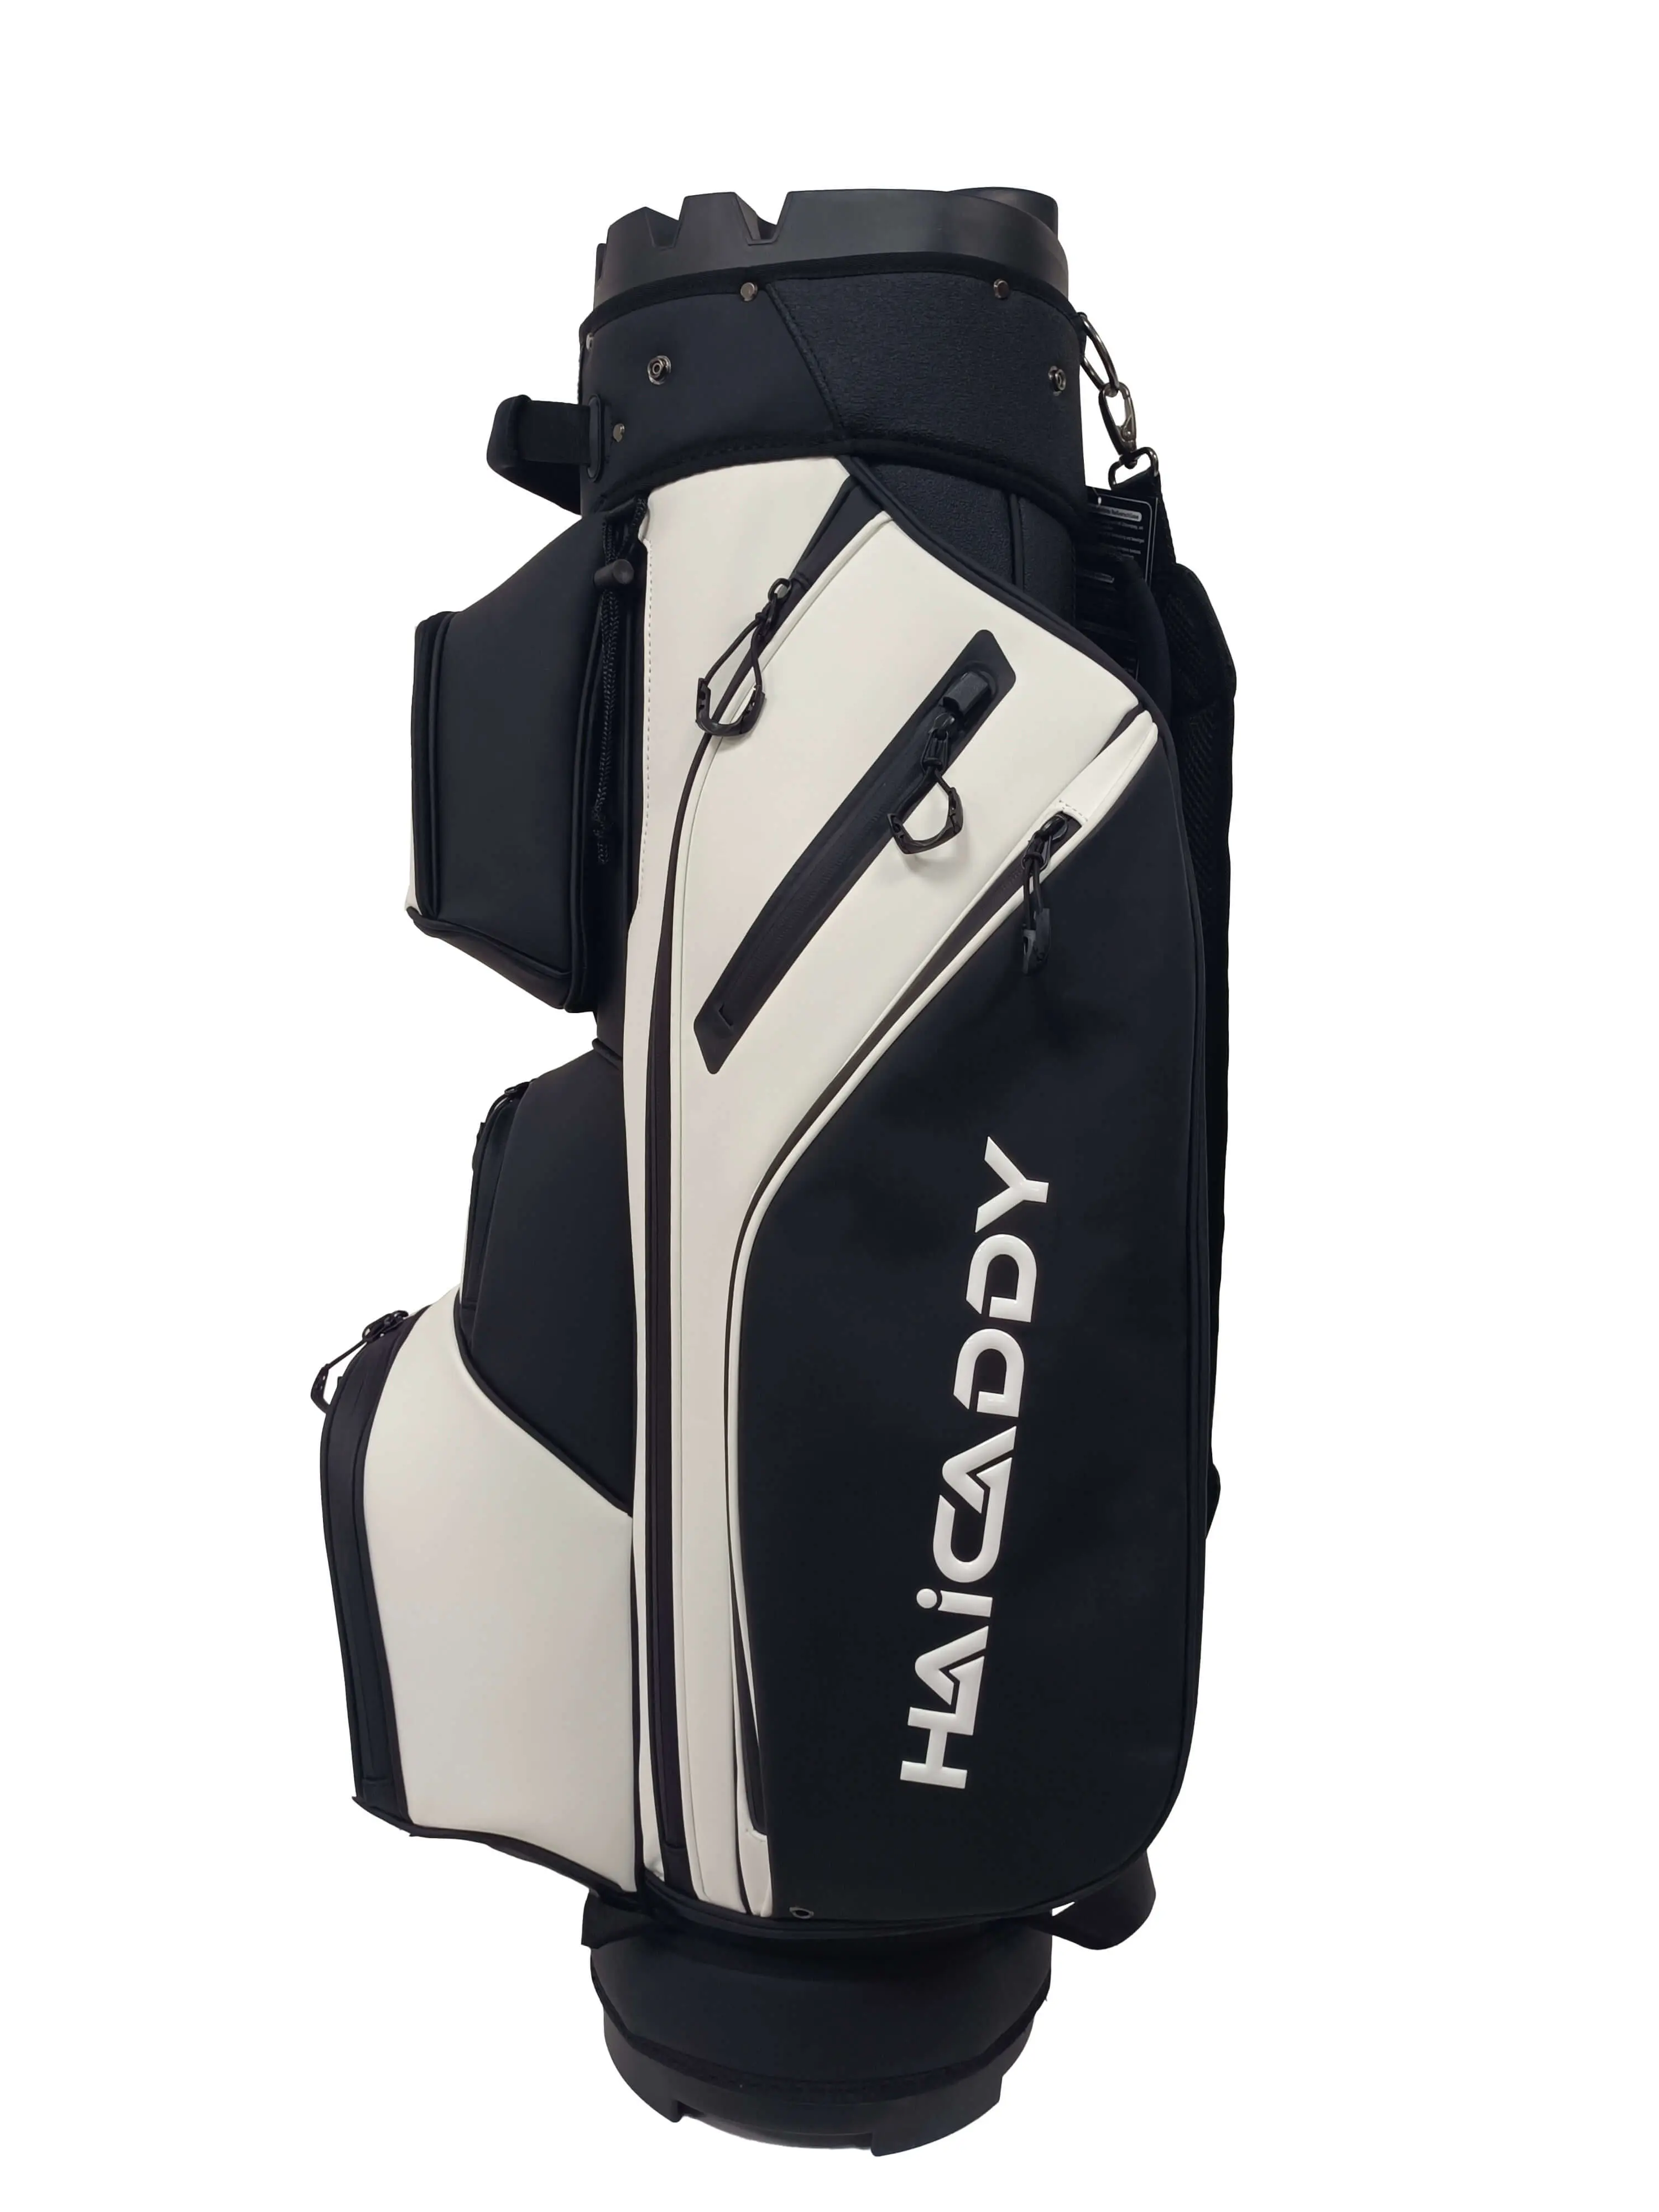 PRE-VENDITA Sacca da golf Haicaddy Deluxe Organiser con tasca magnetica